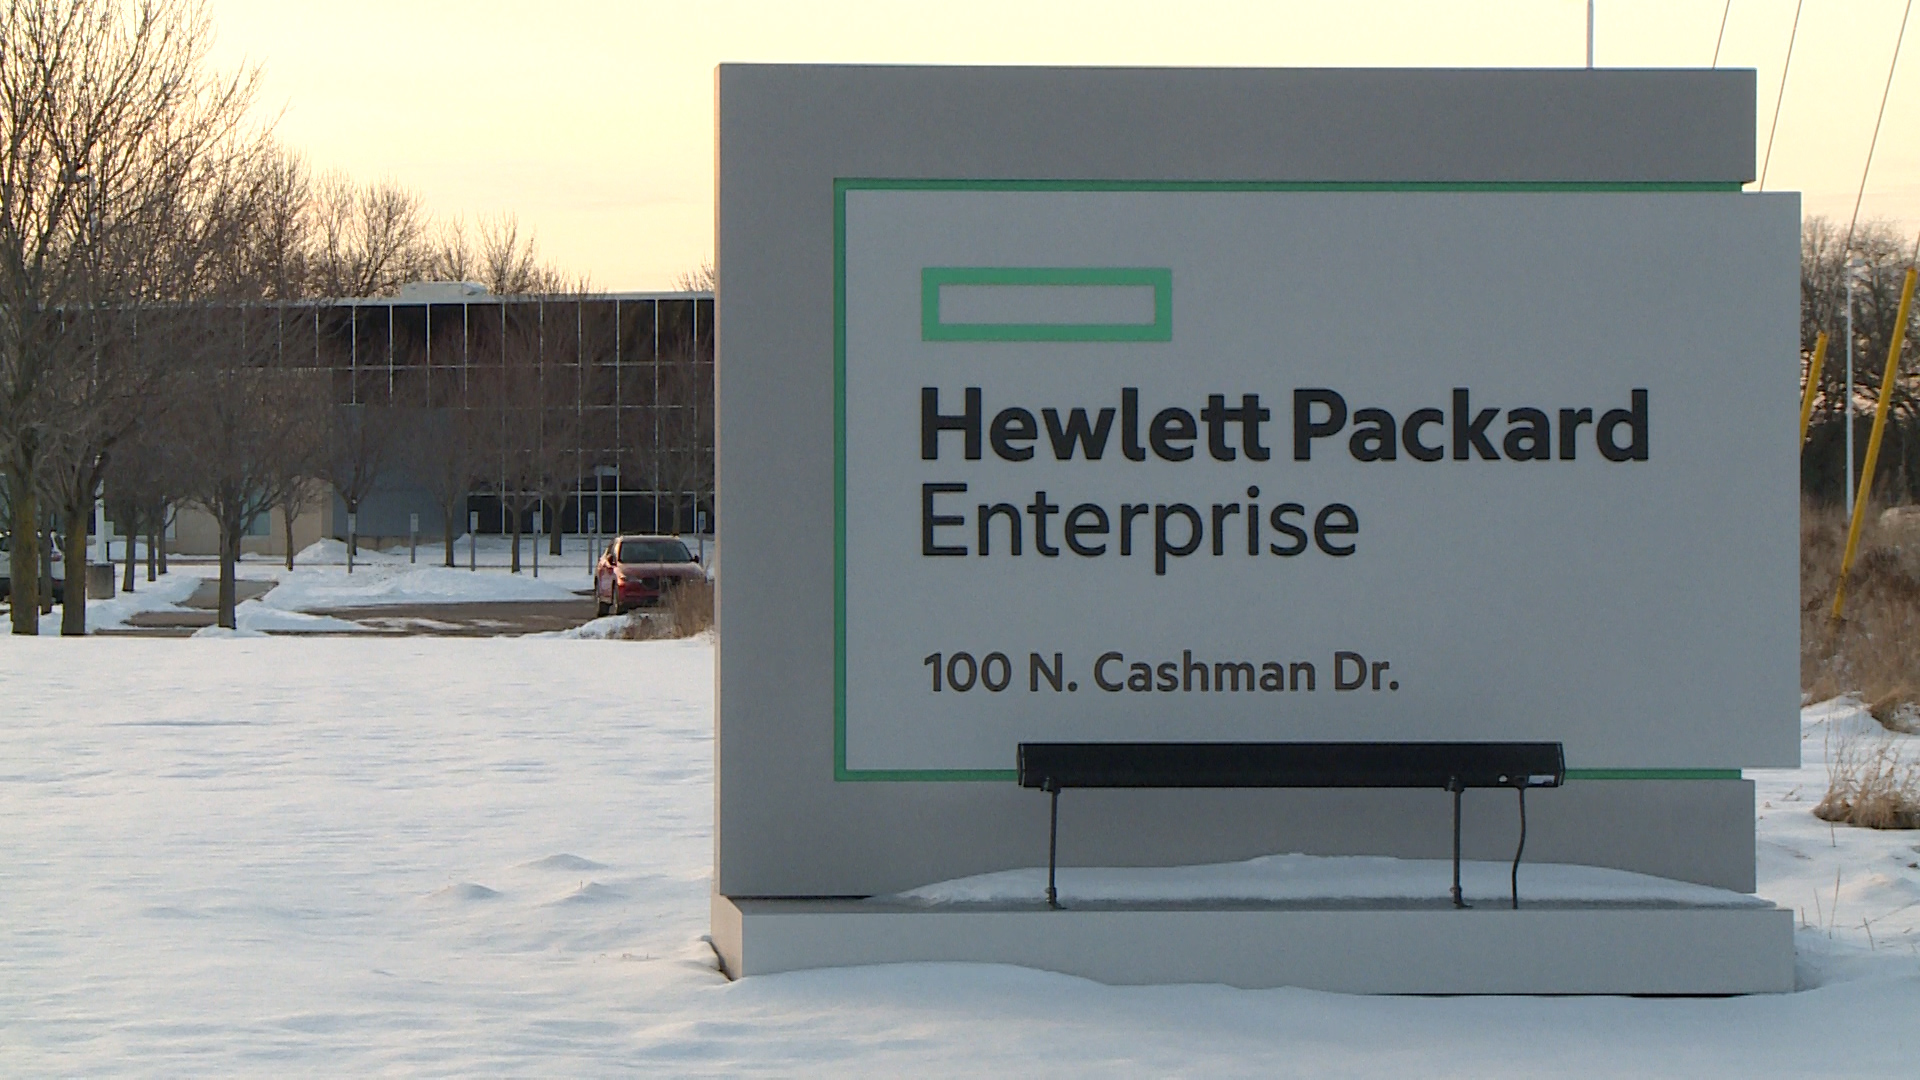 Hewlett Packard Enterprise Career | For R & D Graduate | Apply Here!!